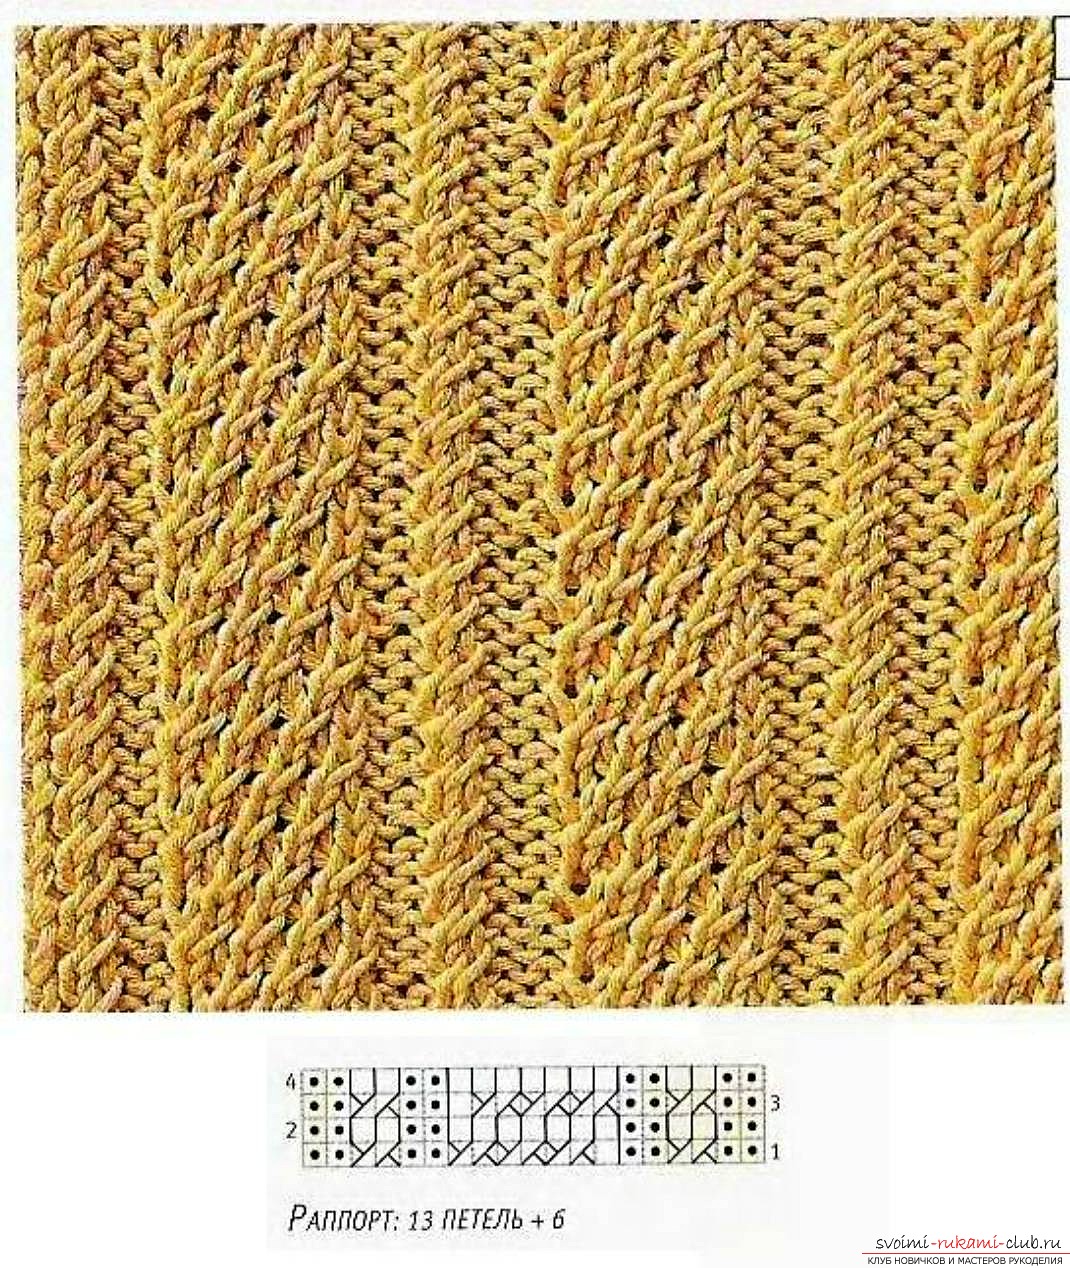 knitted knitting needles. Photo №5